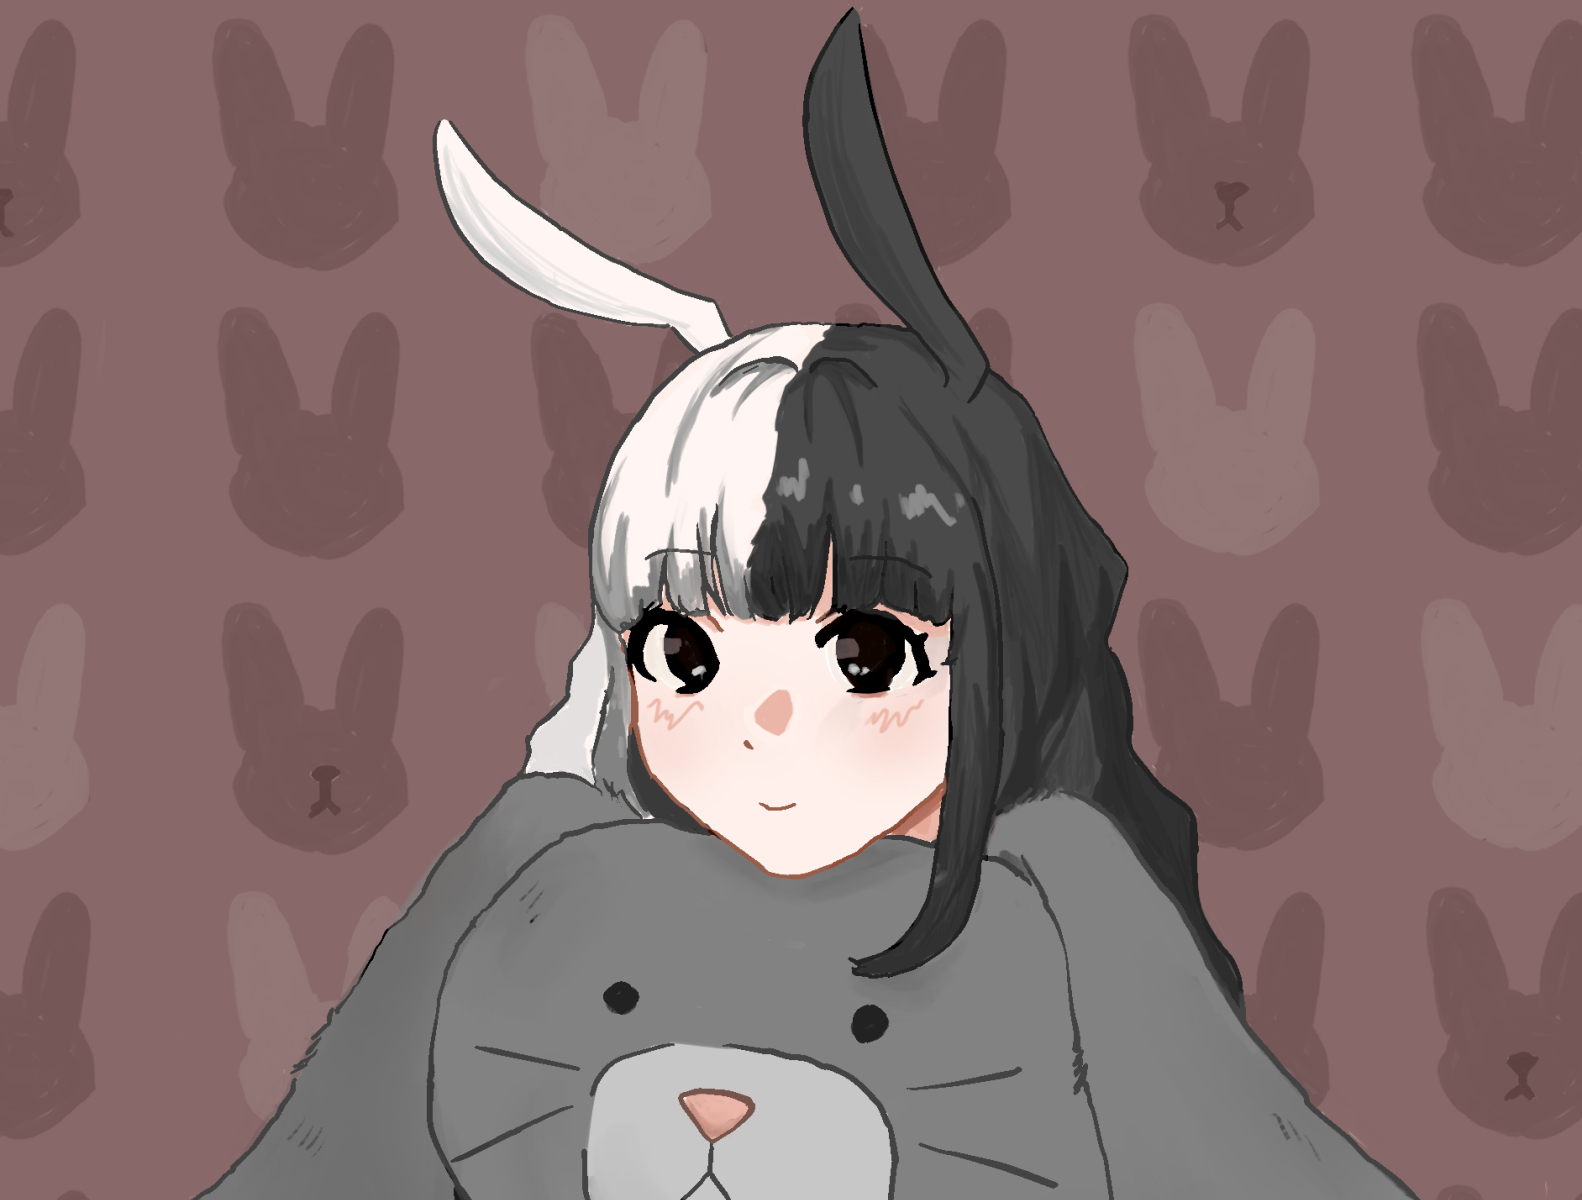 Wallpaper ID: 126608 / anime girls, Black clothes, long hair, white hair,  bunny ears, anime Wallpaper